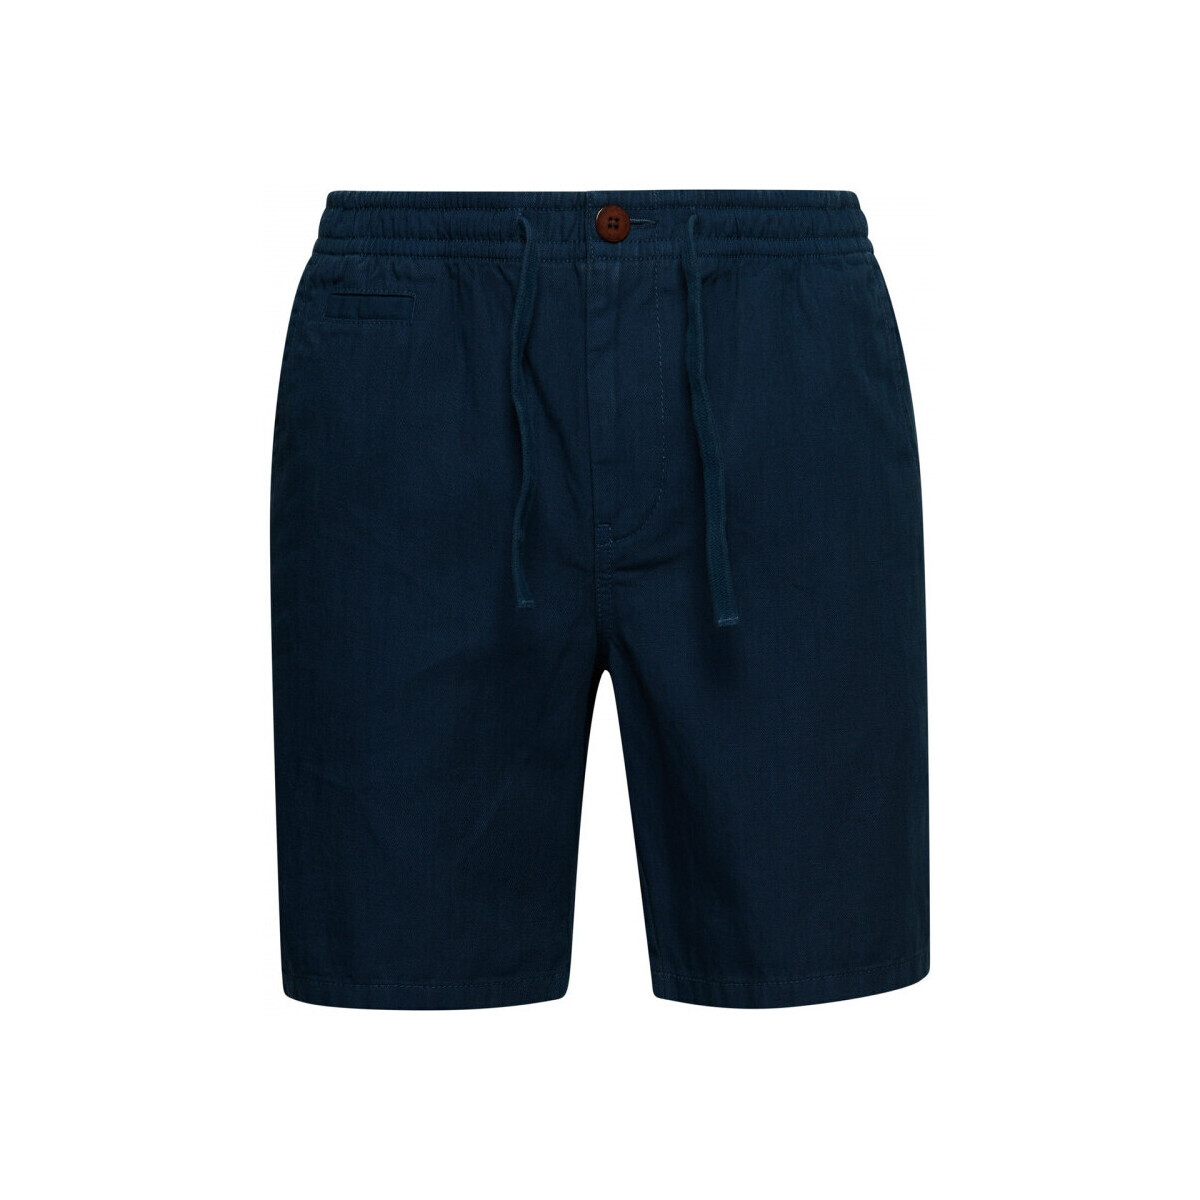 Textil Homem Shorts / Bermudas Superdry Vintage overdyed Azul